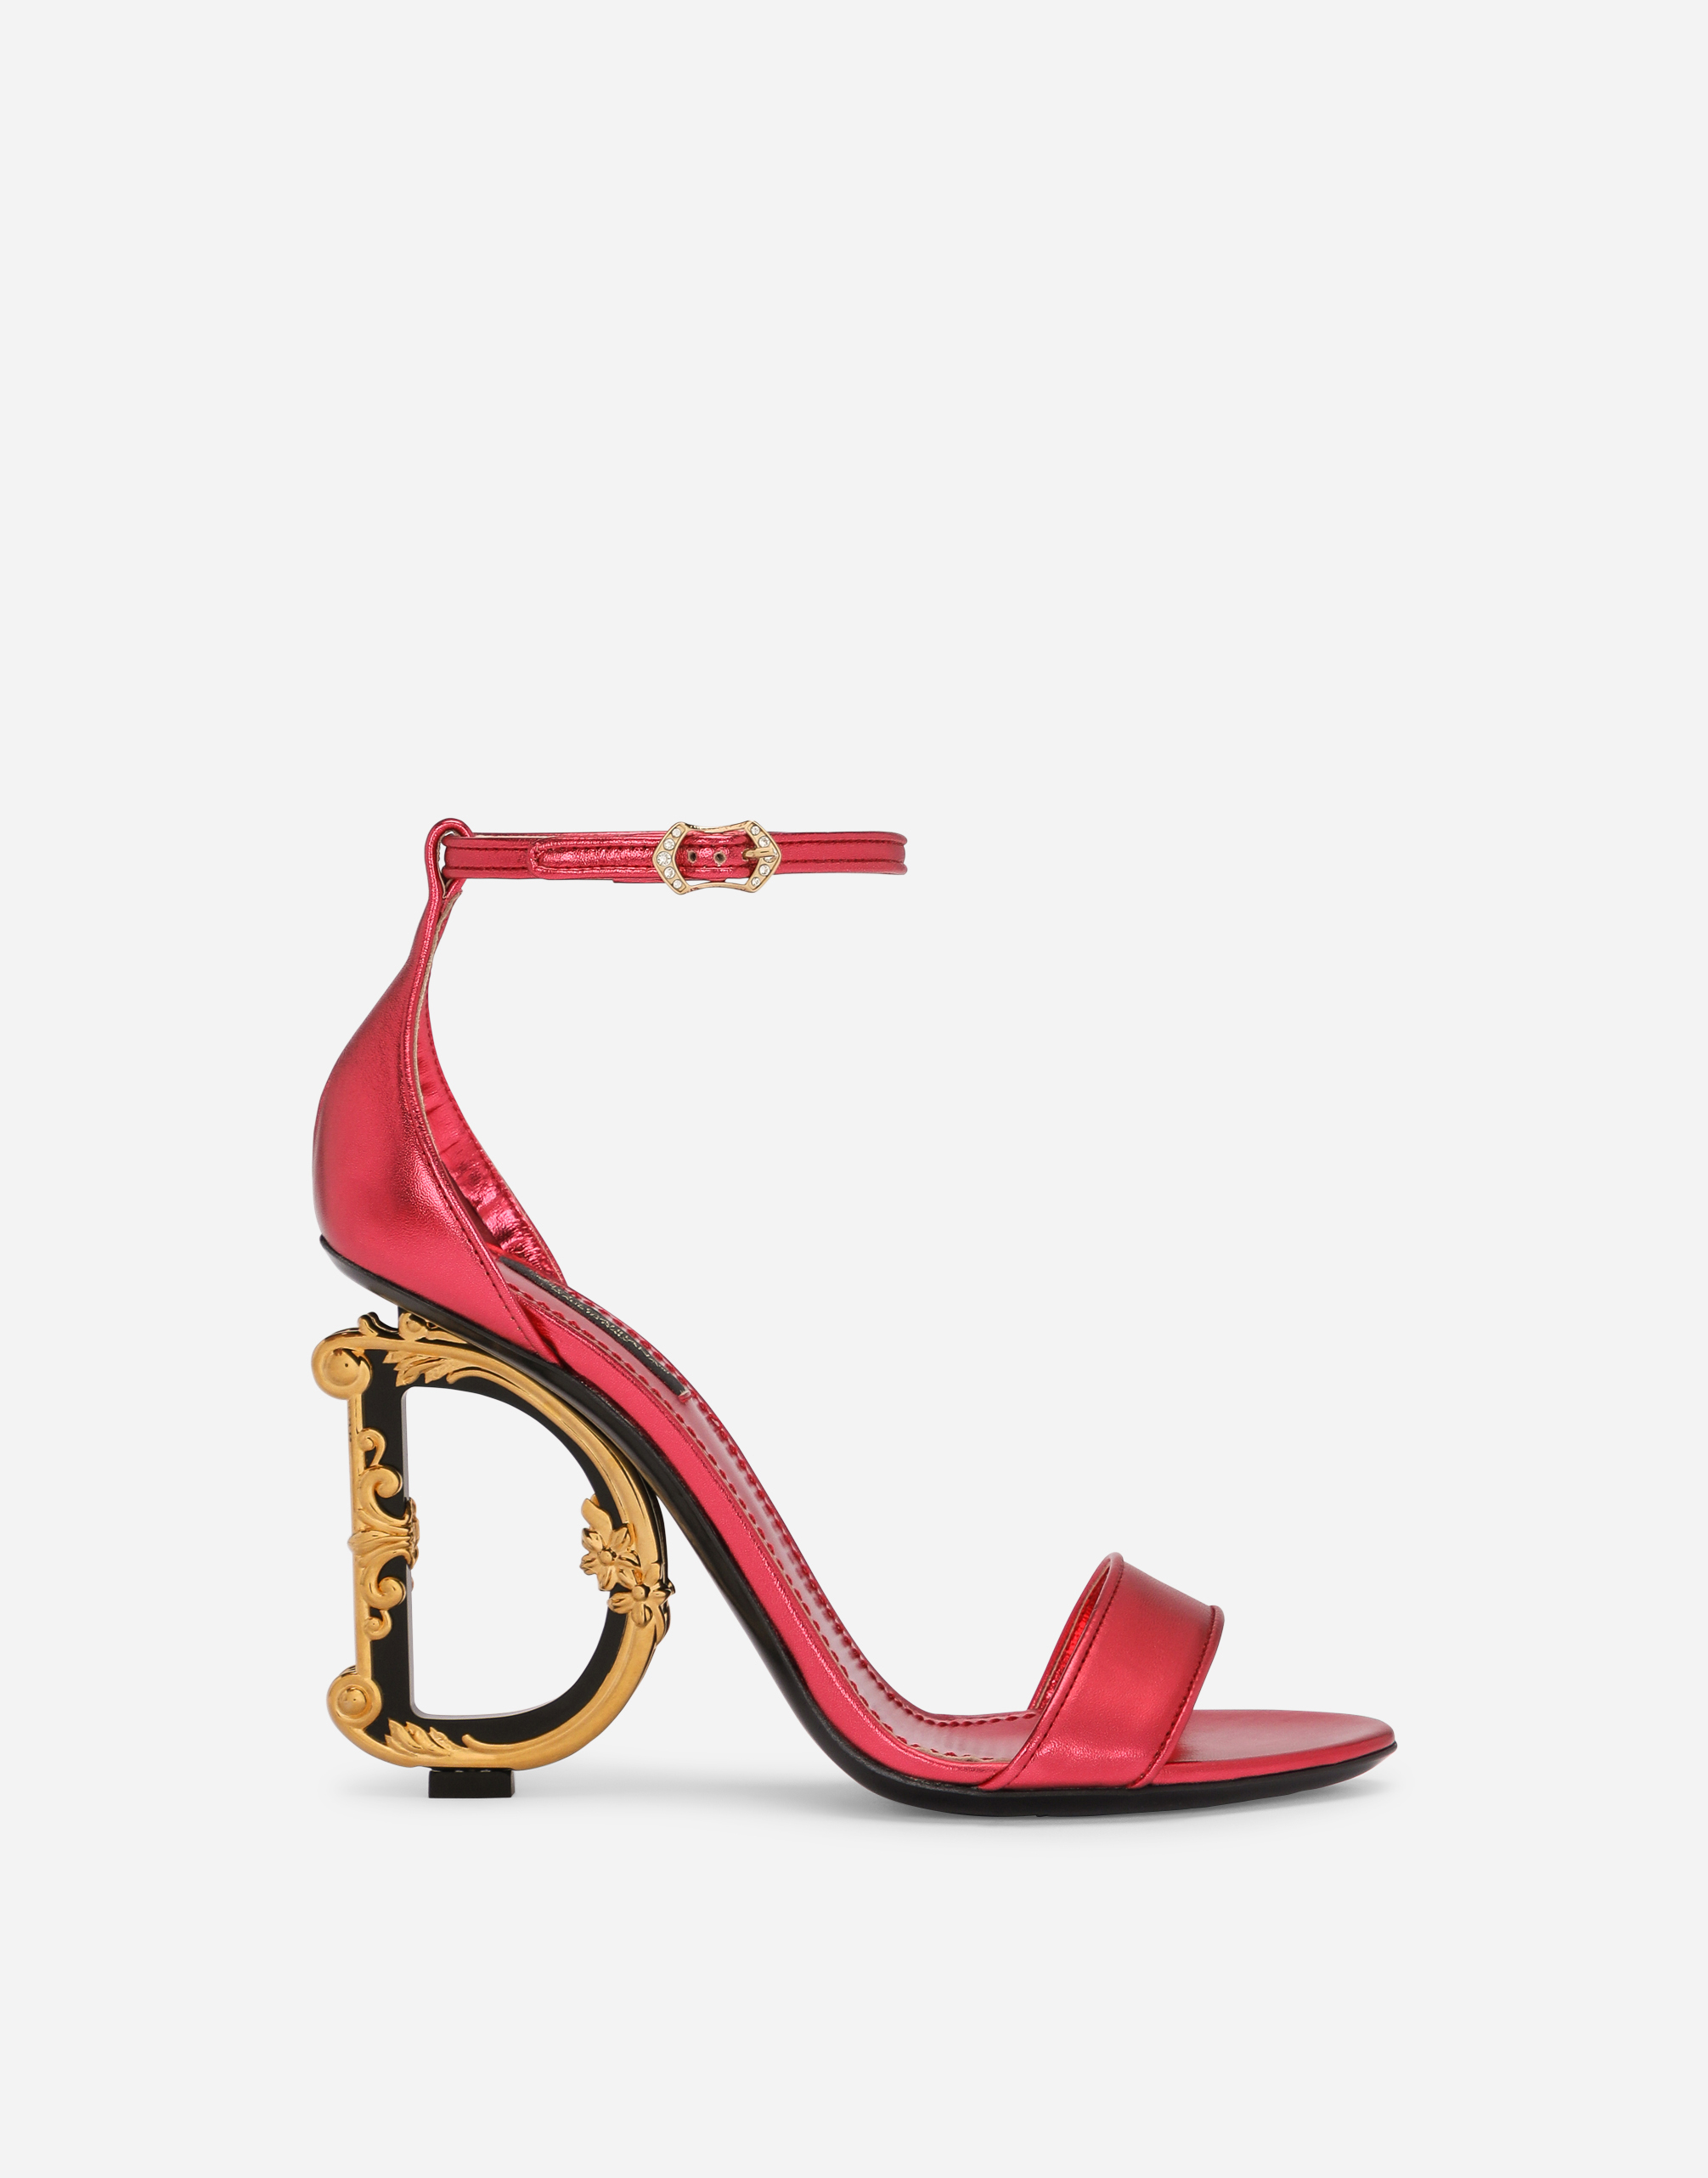 Nappa mordore sandals with baroque DG heel in Fuchsia